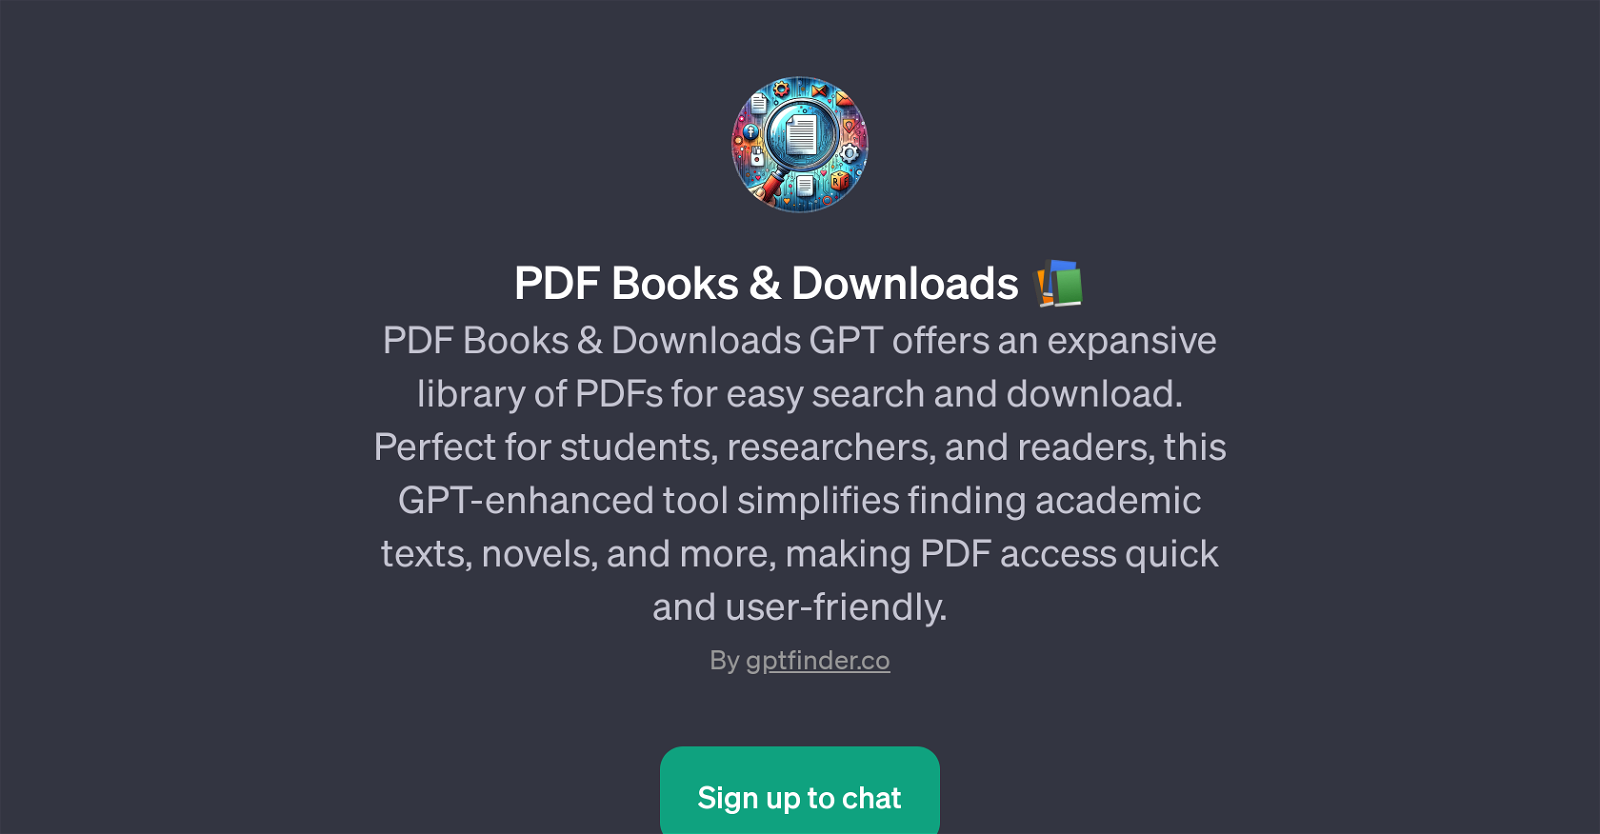 PDF Books & Downloads GPT website